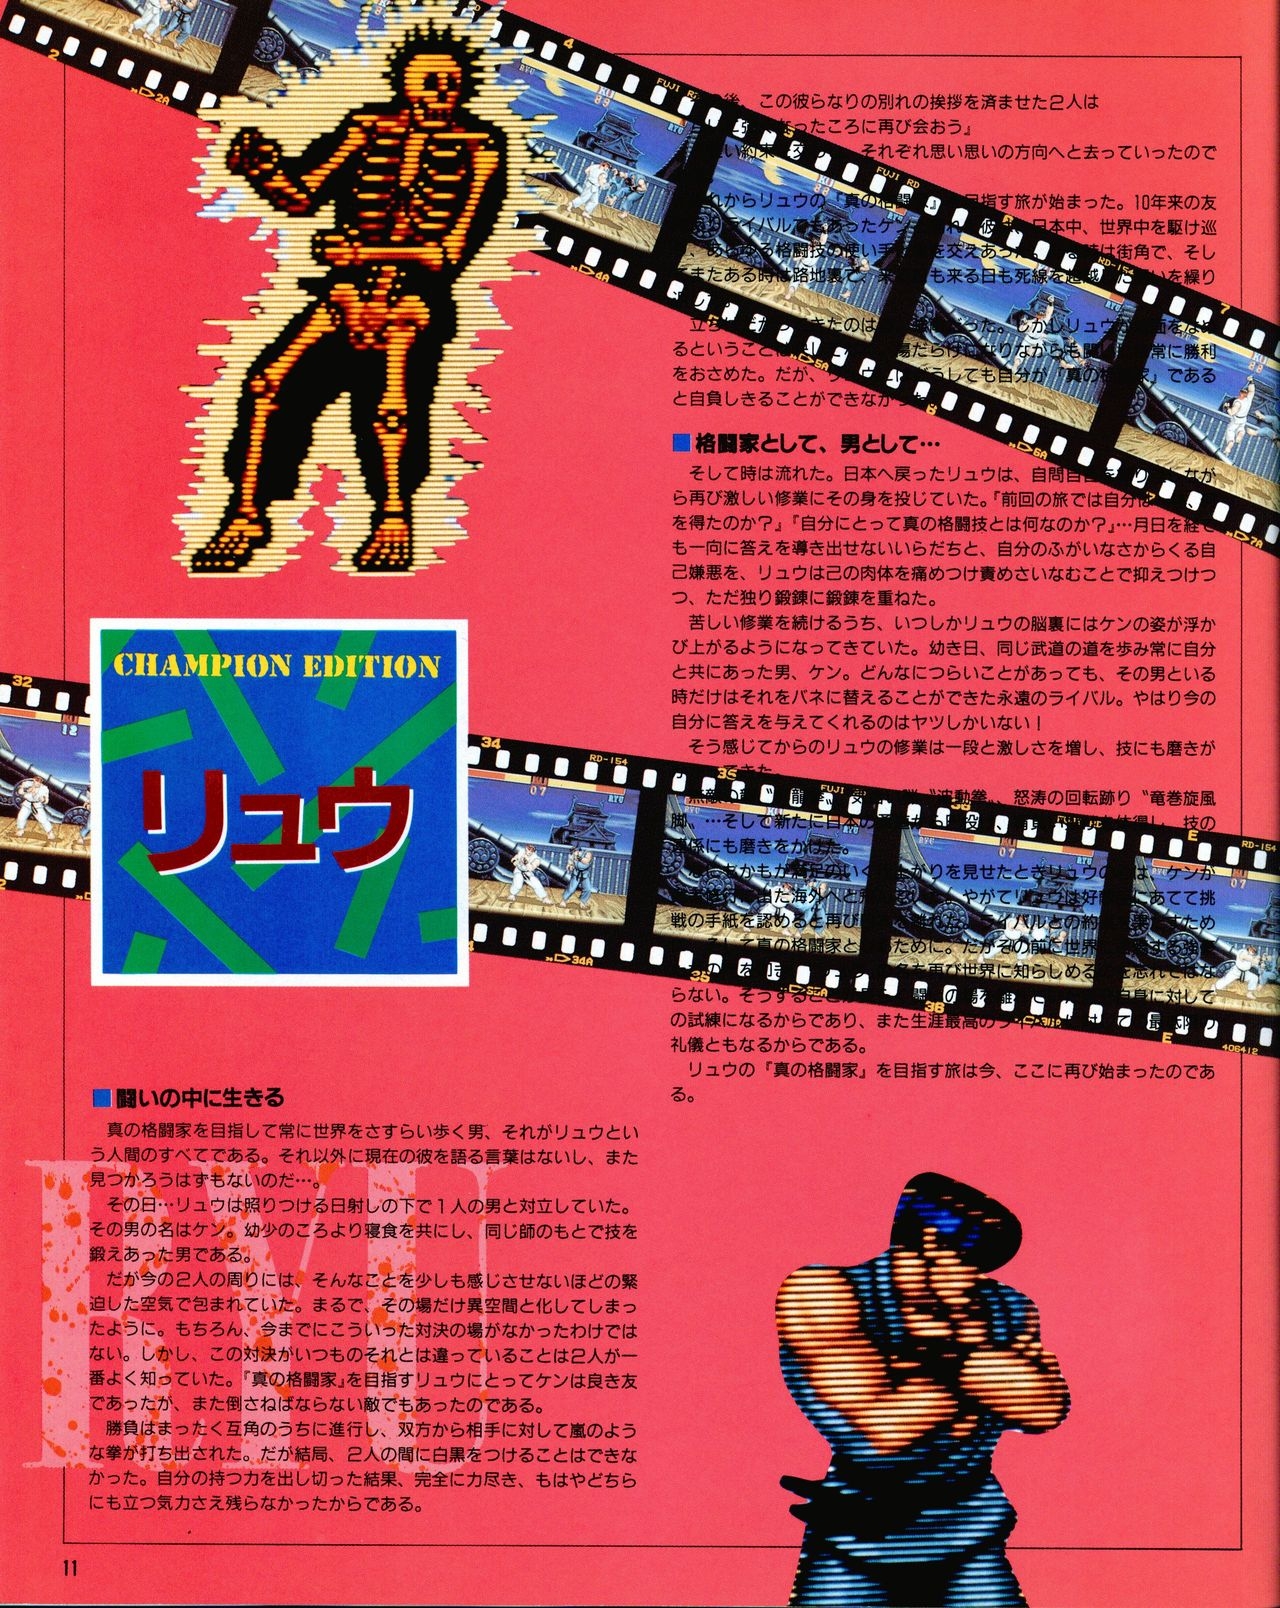 Street Fighter II Dash - Gamest special issue 77 12